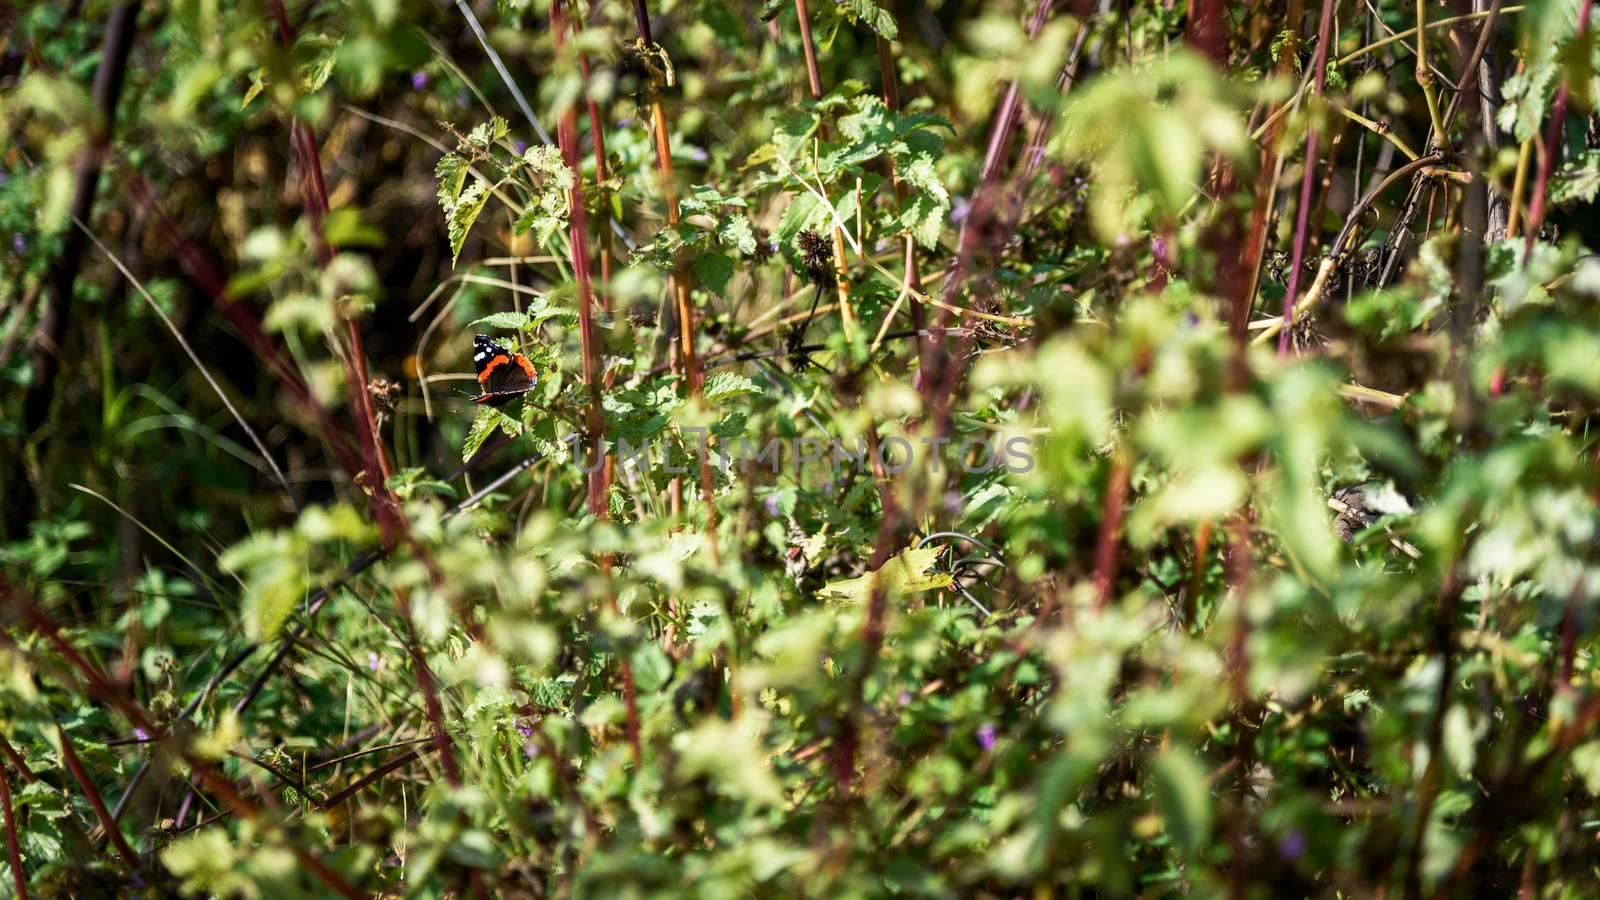 Butterfly sits on nettle bush by WolfWilhelm